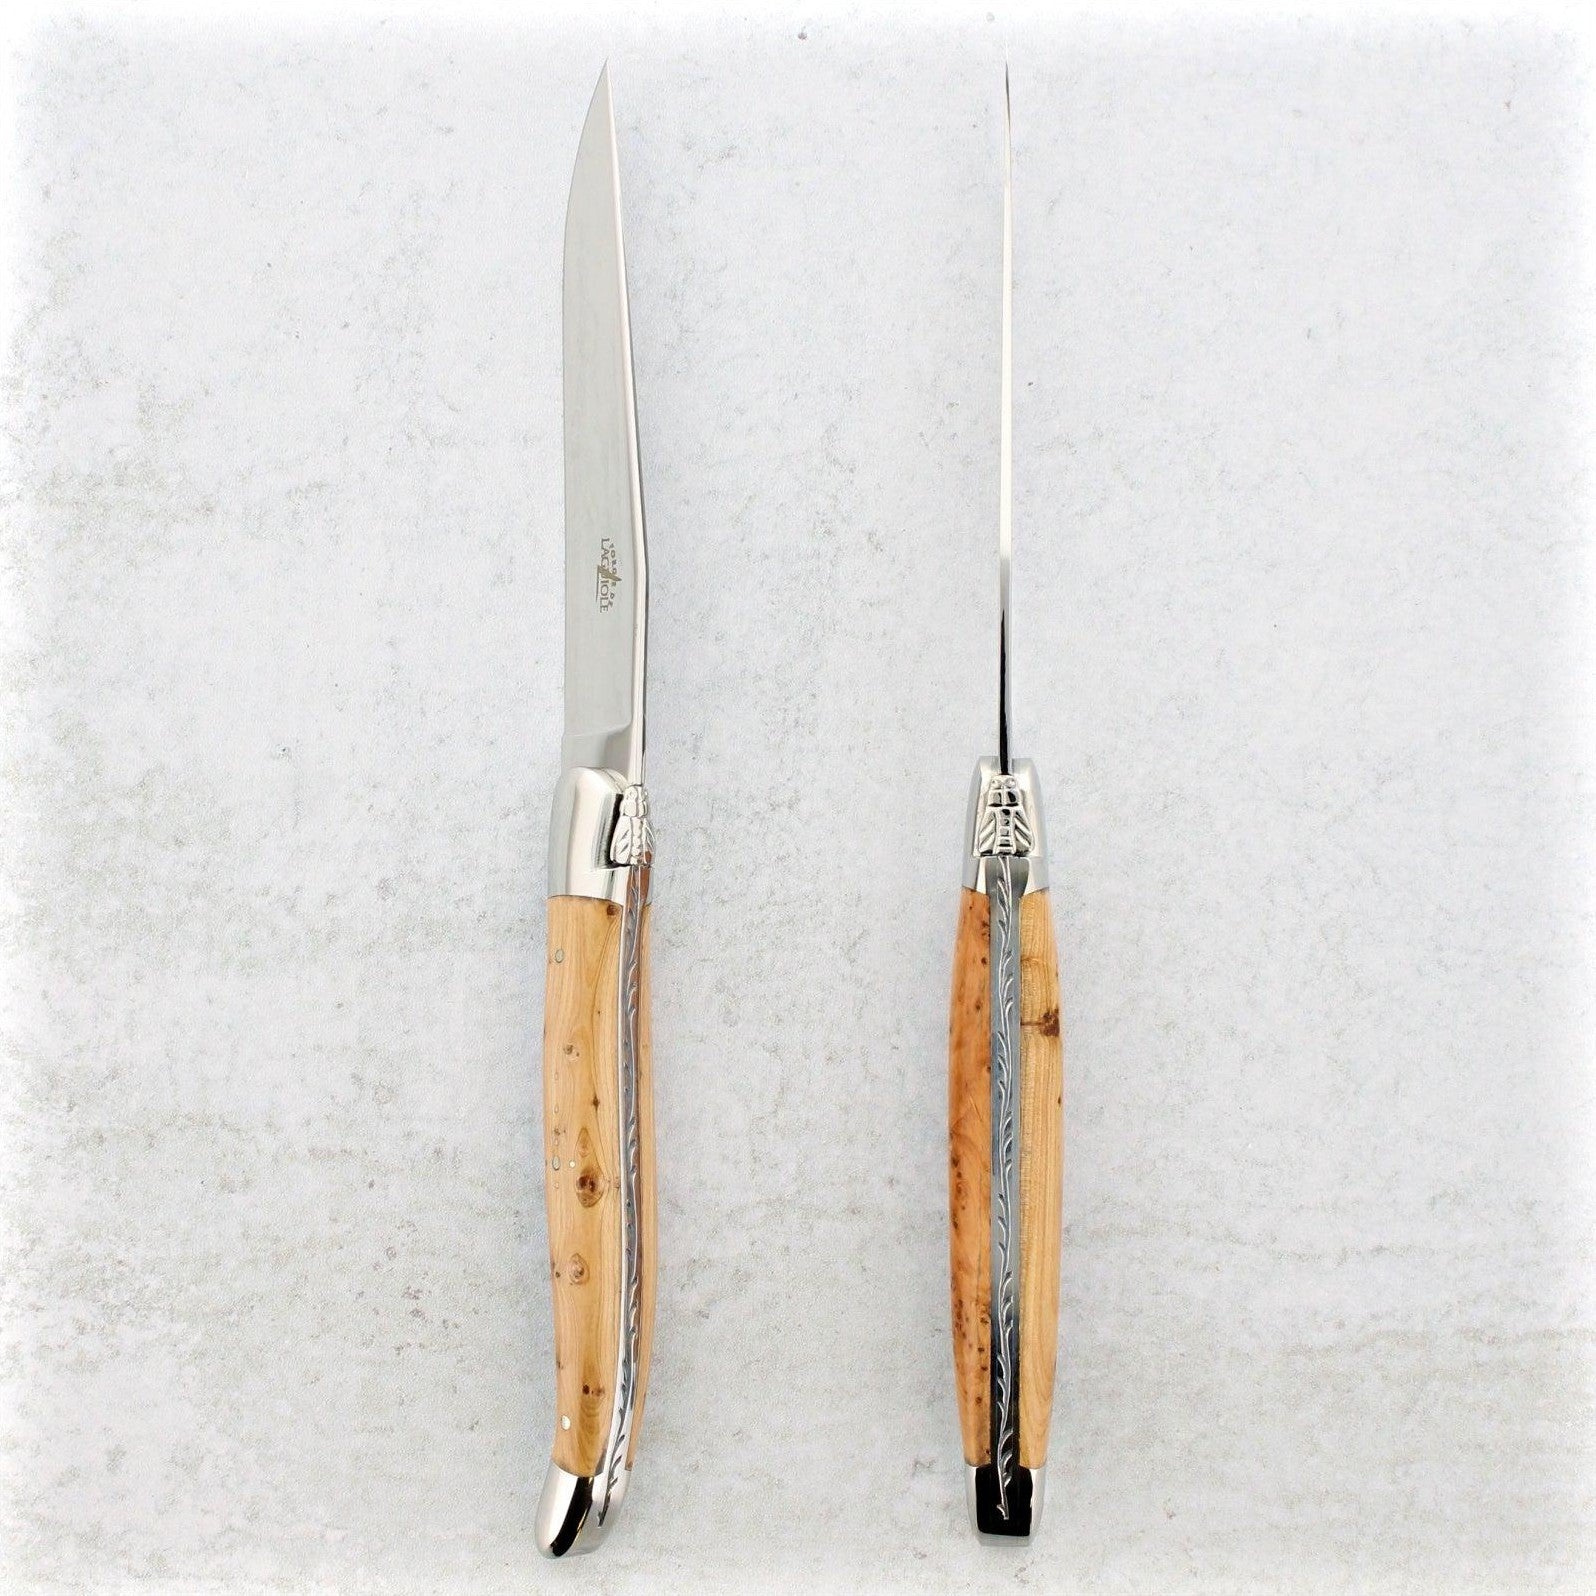 Nontron Steak Knives & Flatware Sets Burned Boxwood - Laguiole Imports